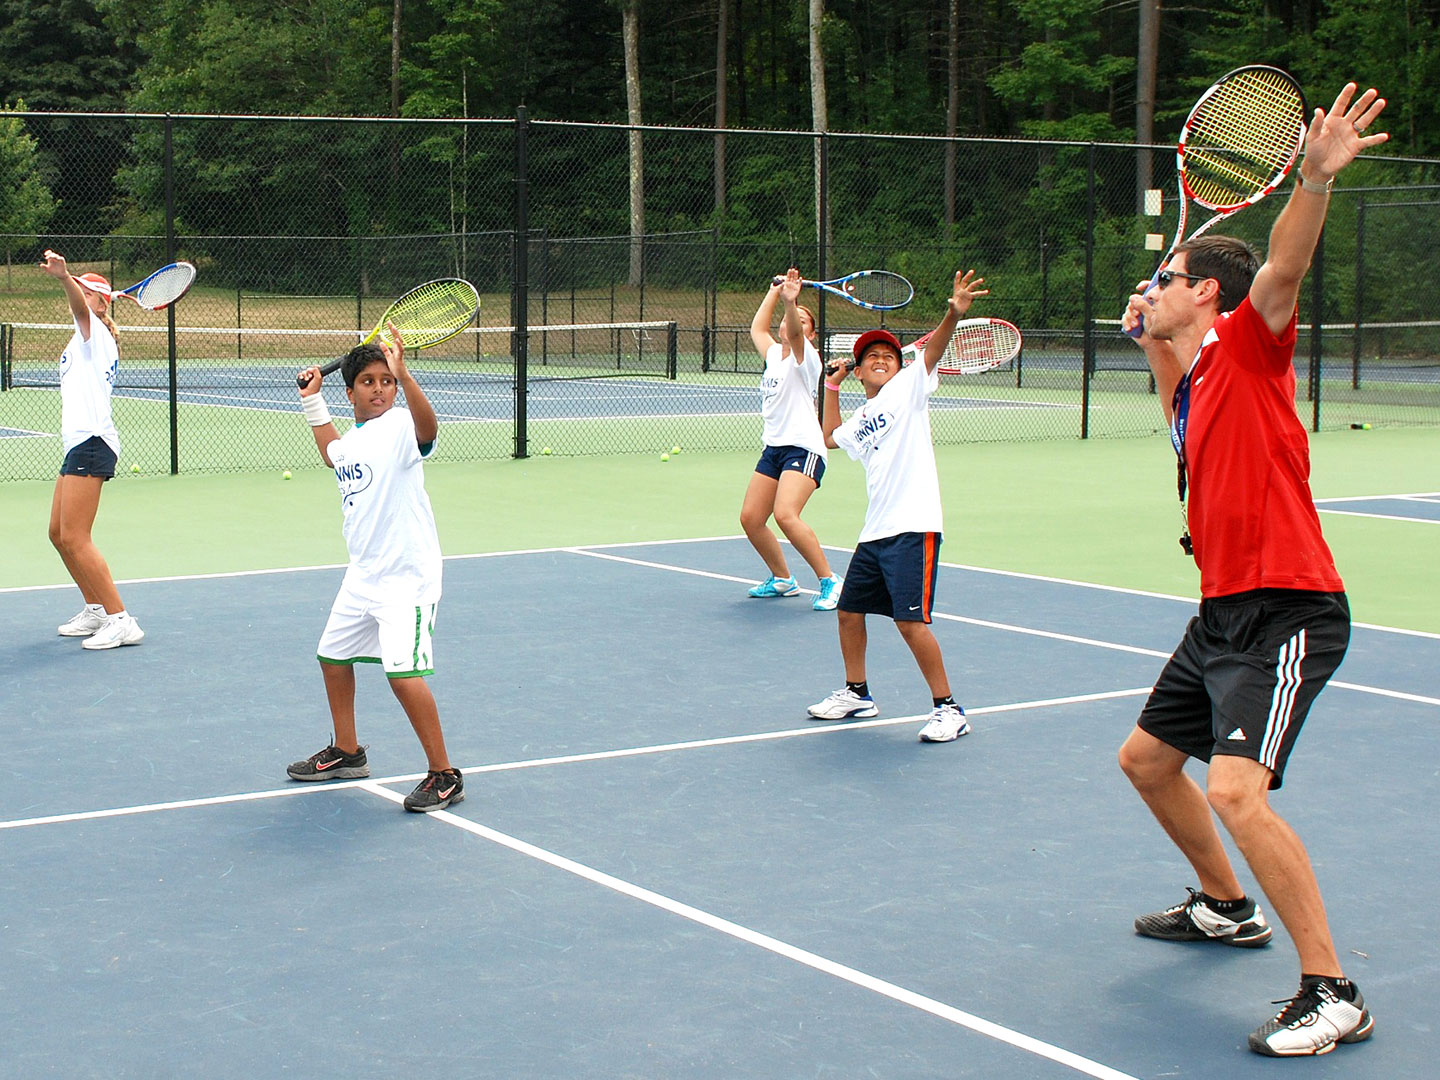 Tennis Camp Coach gives swing feedback